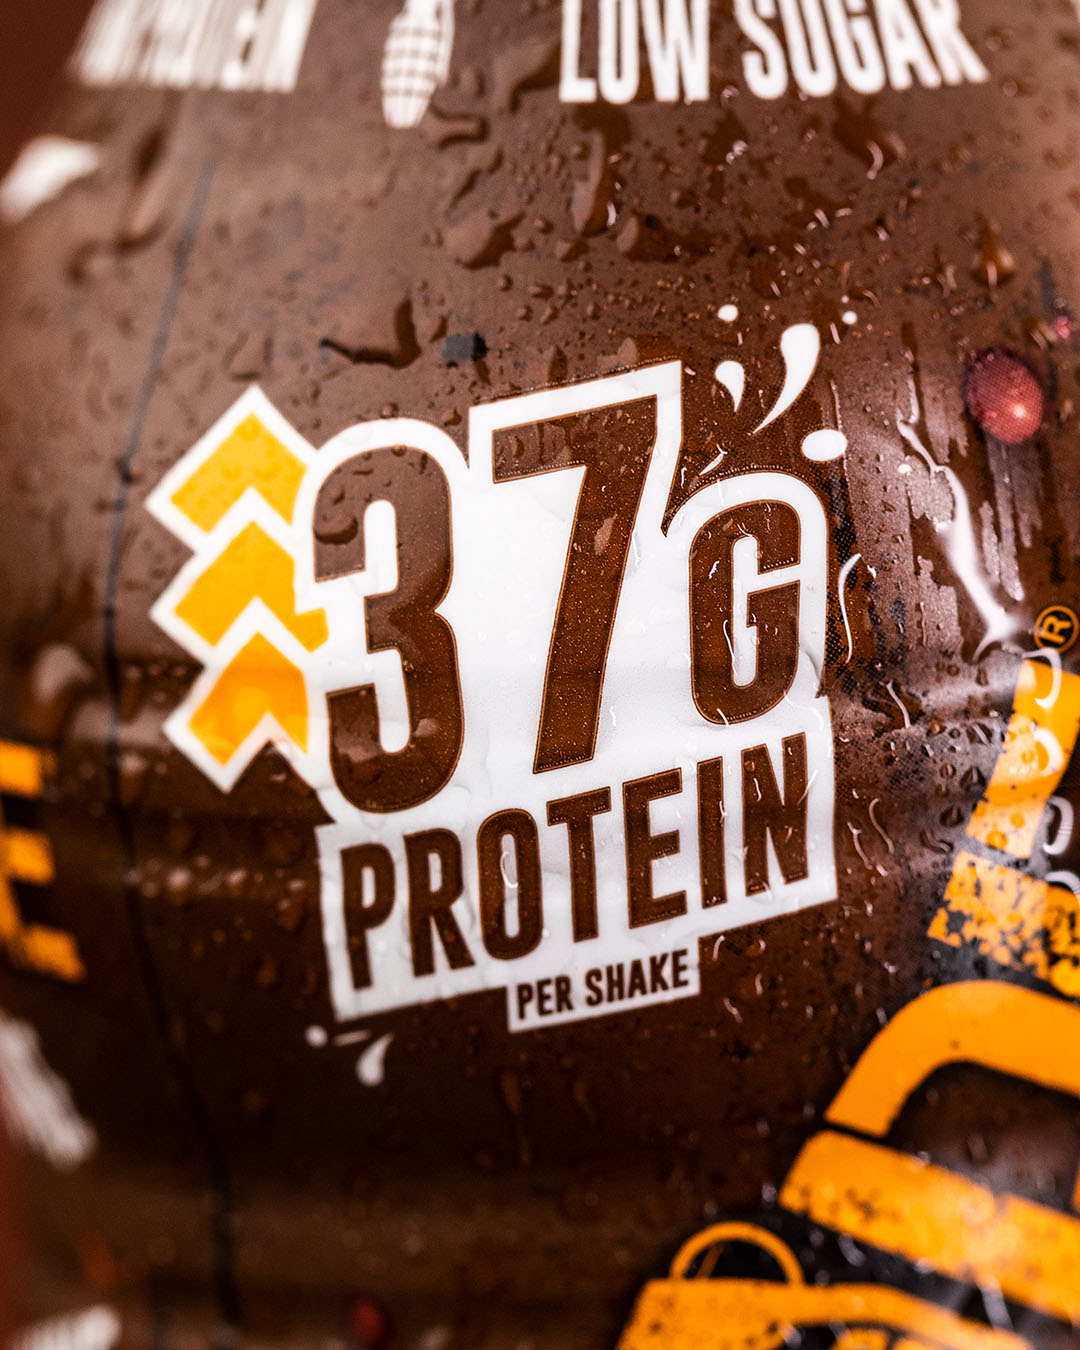 Fudge Brownie Protein Shake (6 Pack) 500ml